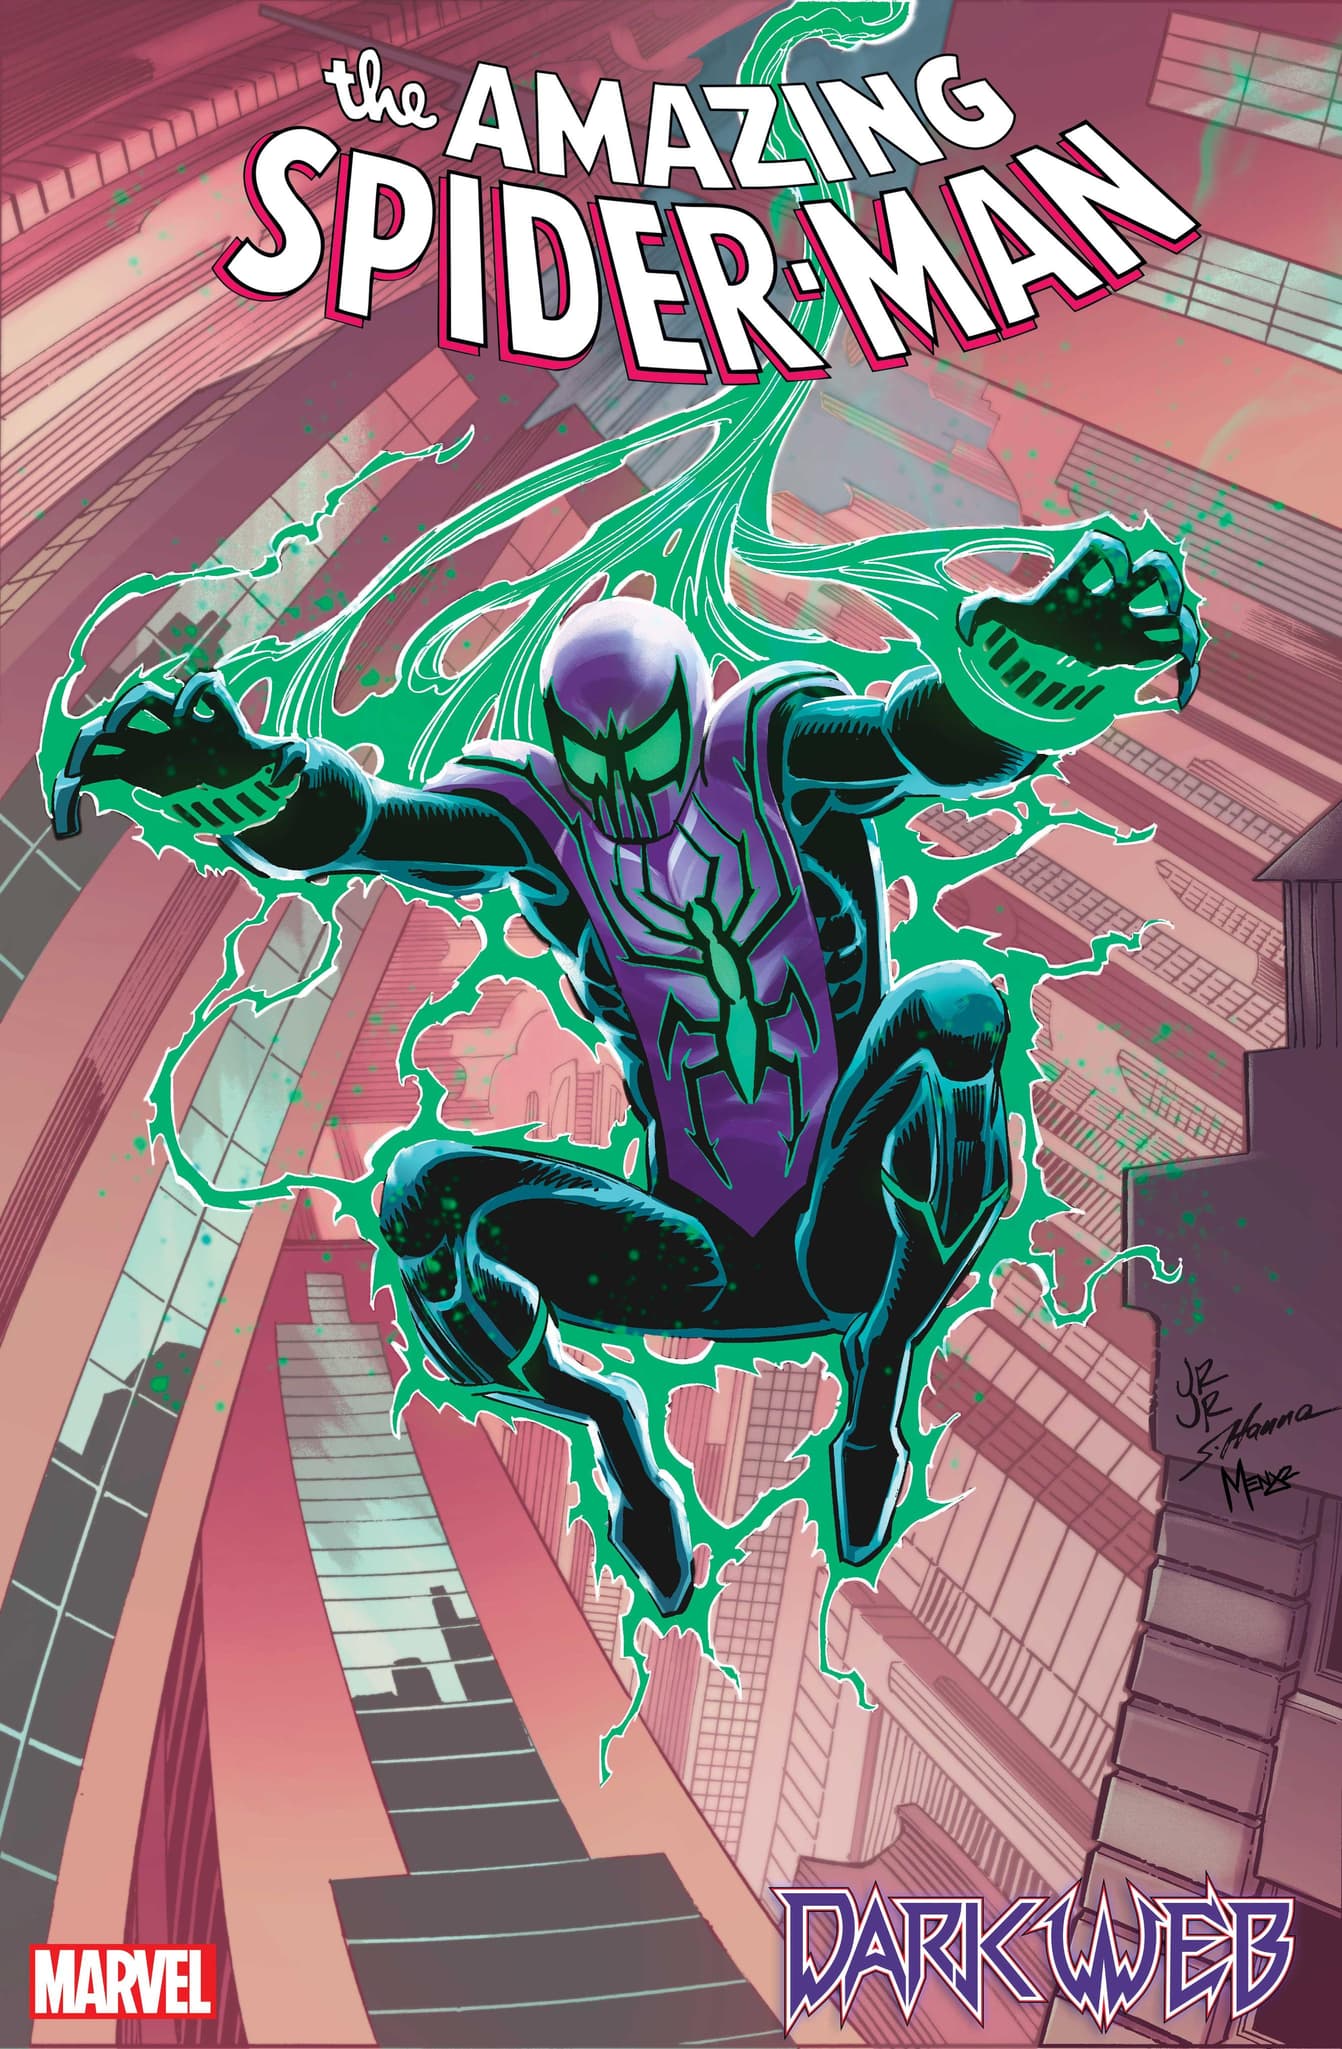 AMAZING SPIDER-MAN #14 cover by John Romita Jr.